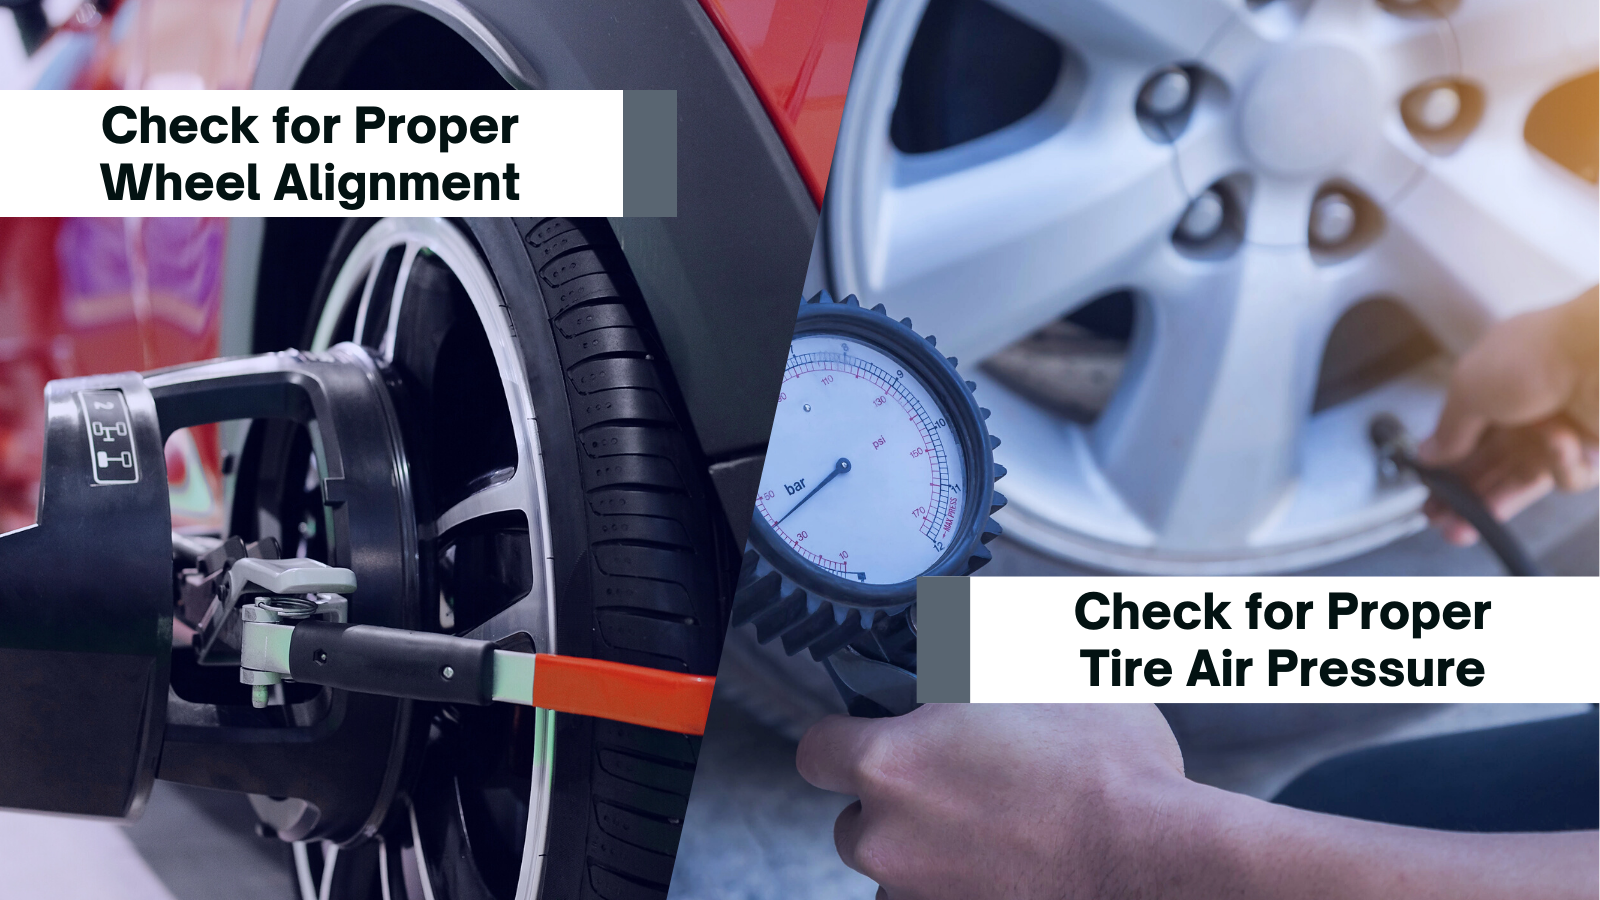 Proper Wheel Alignment Proper Tire Air Pressure